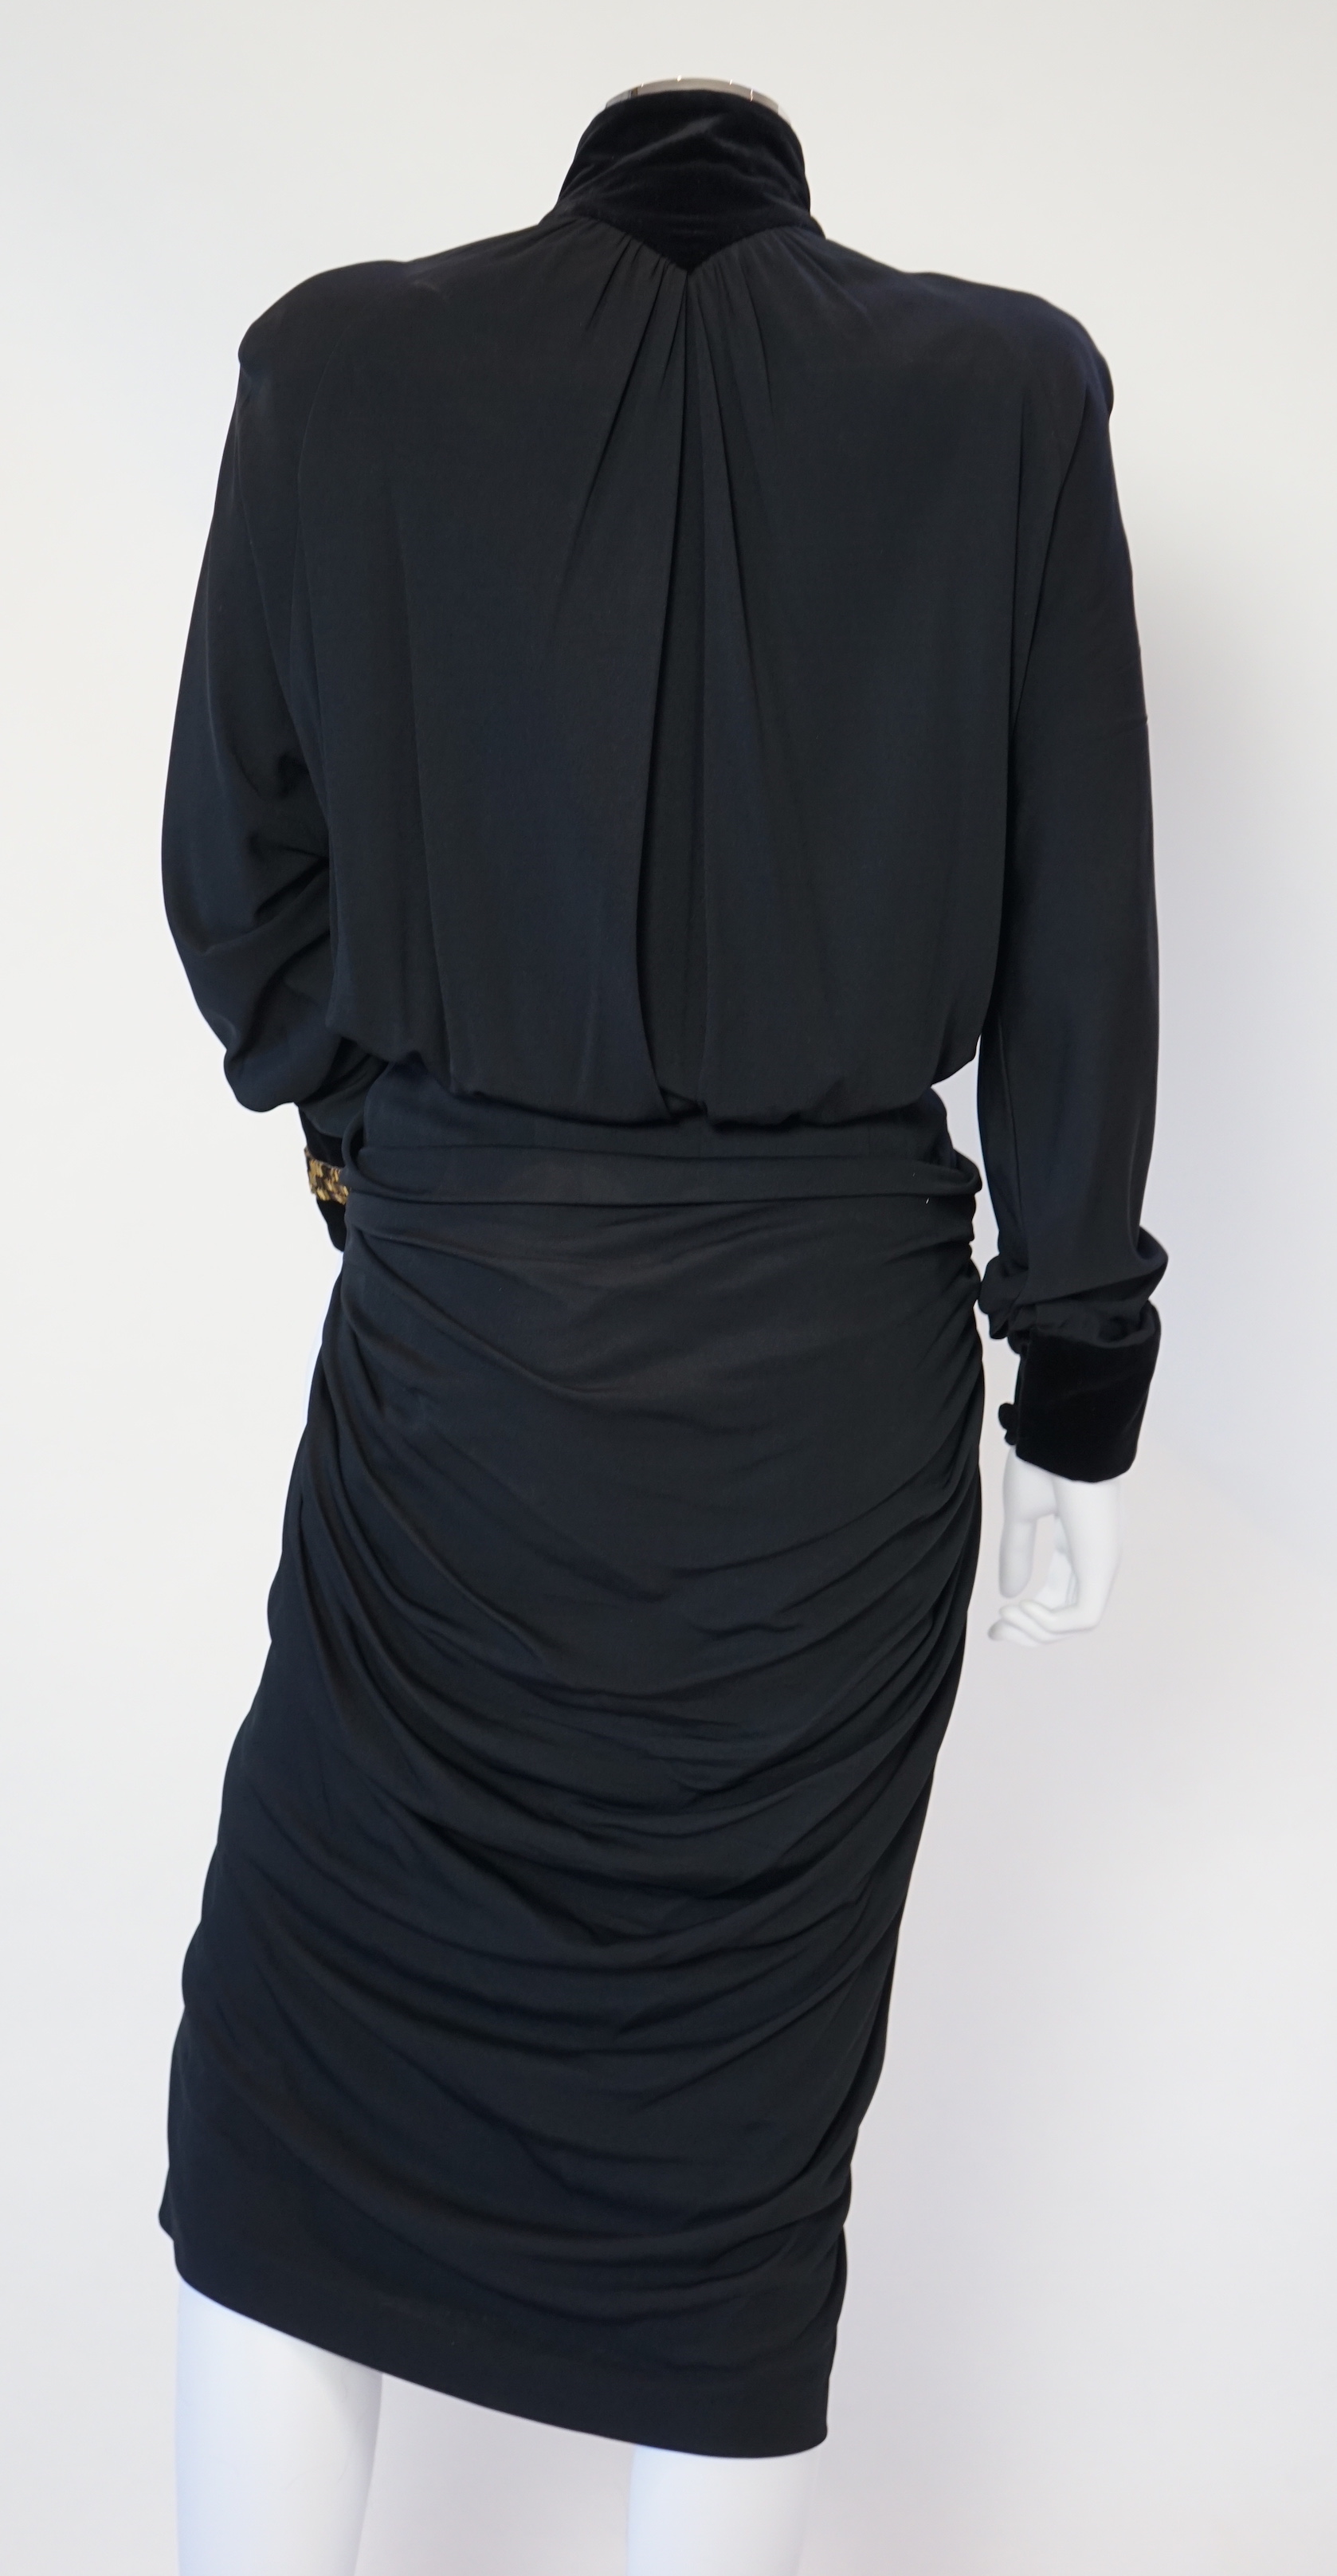 A Karl Lagerfeld black evening dress, stunning dress, velvet collar and velvet cuffs with gold - Image 4 of 11